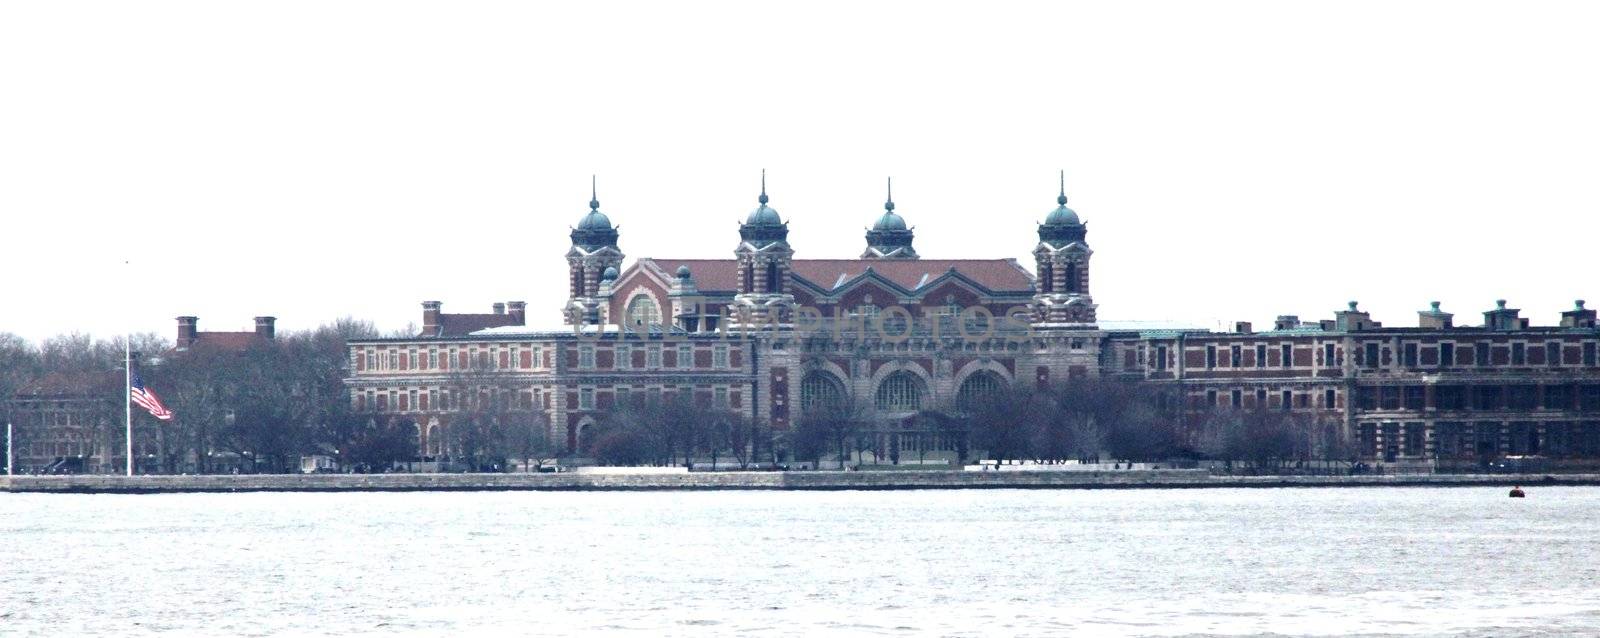 Ellis Island by adrianocastelli